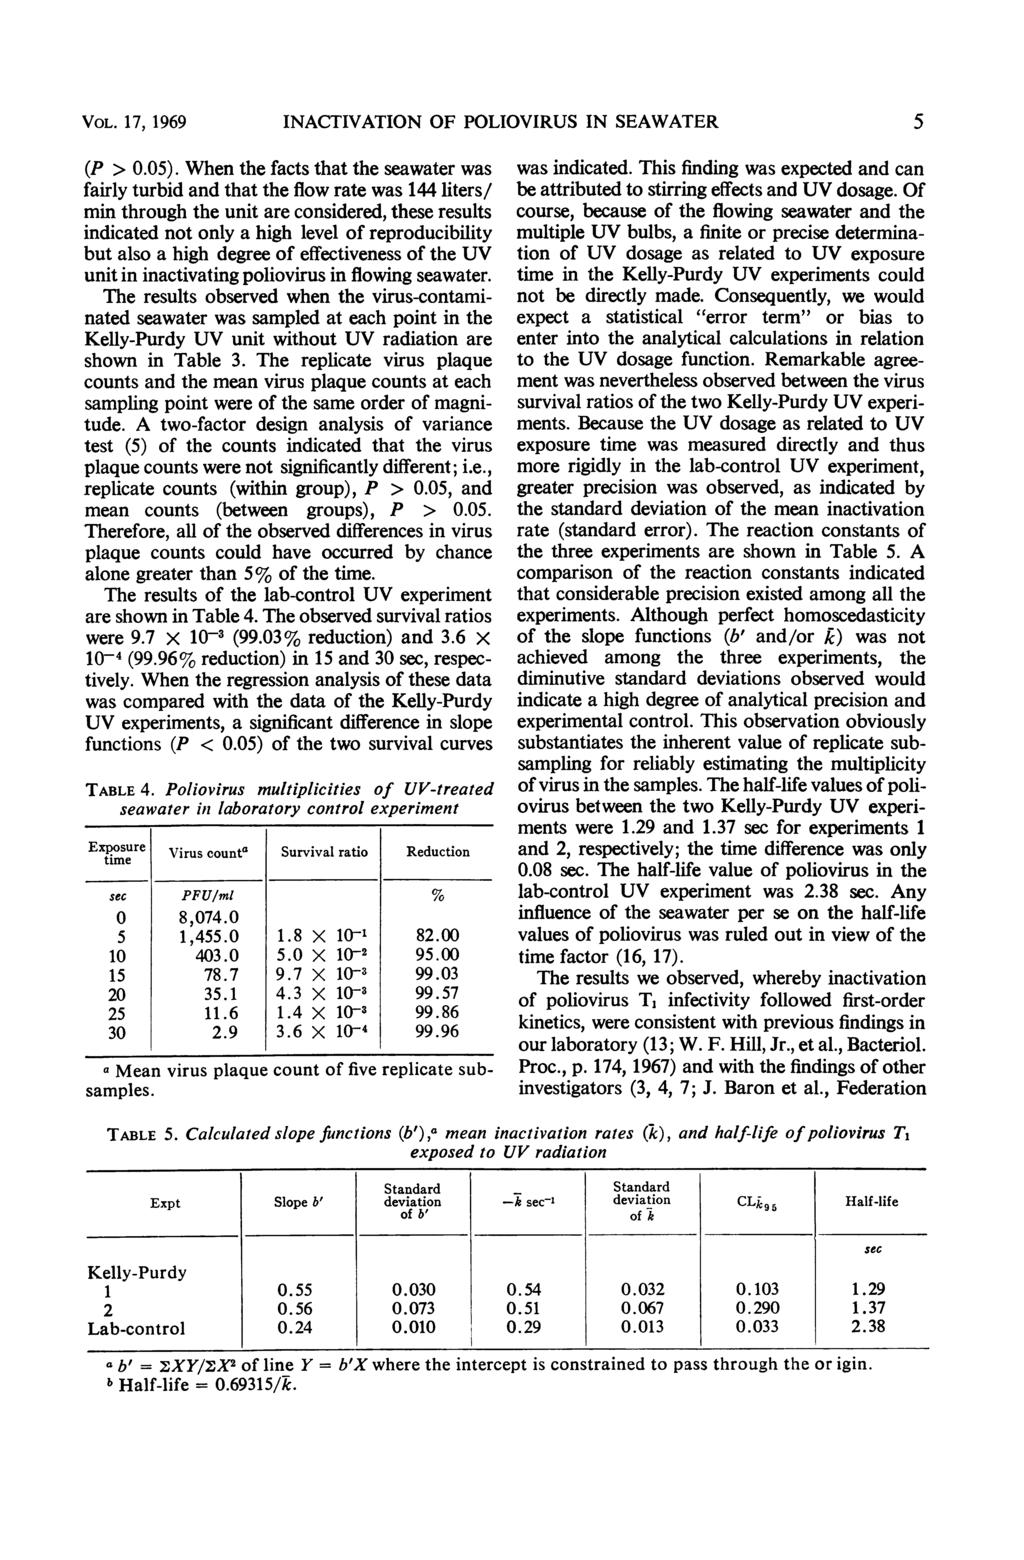 VOL. 171 1969 INACTIVATION OF POLIOVIRUS IN SEAWATER (P > 0.05).